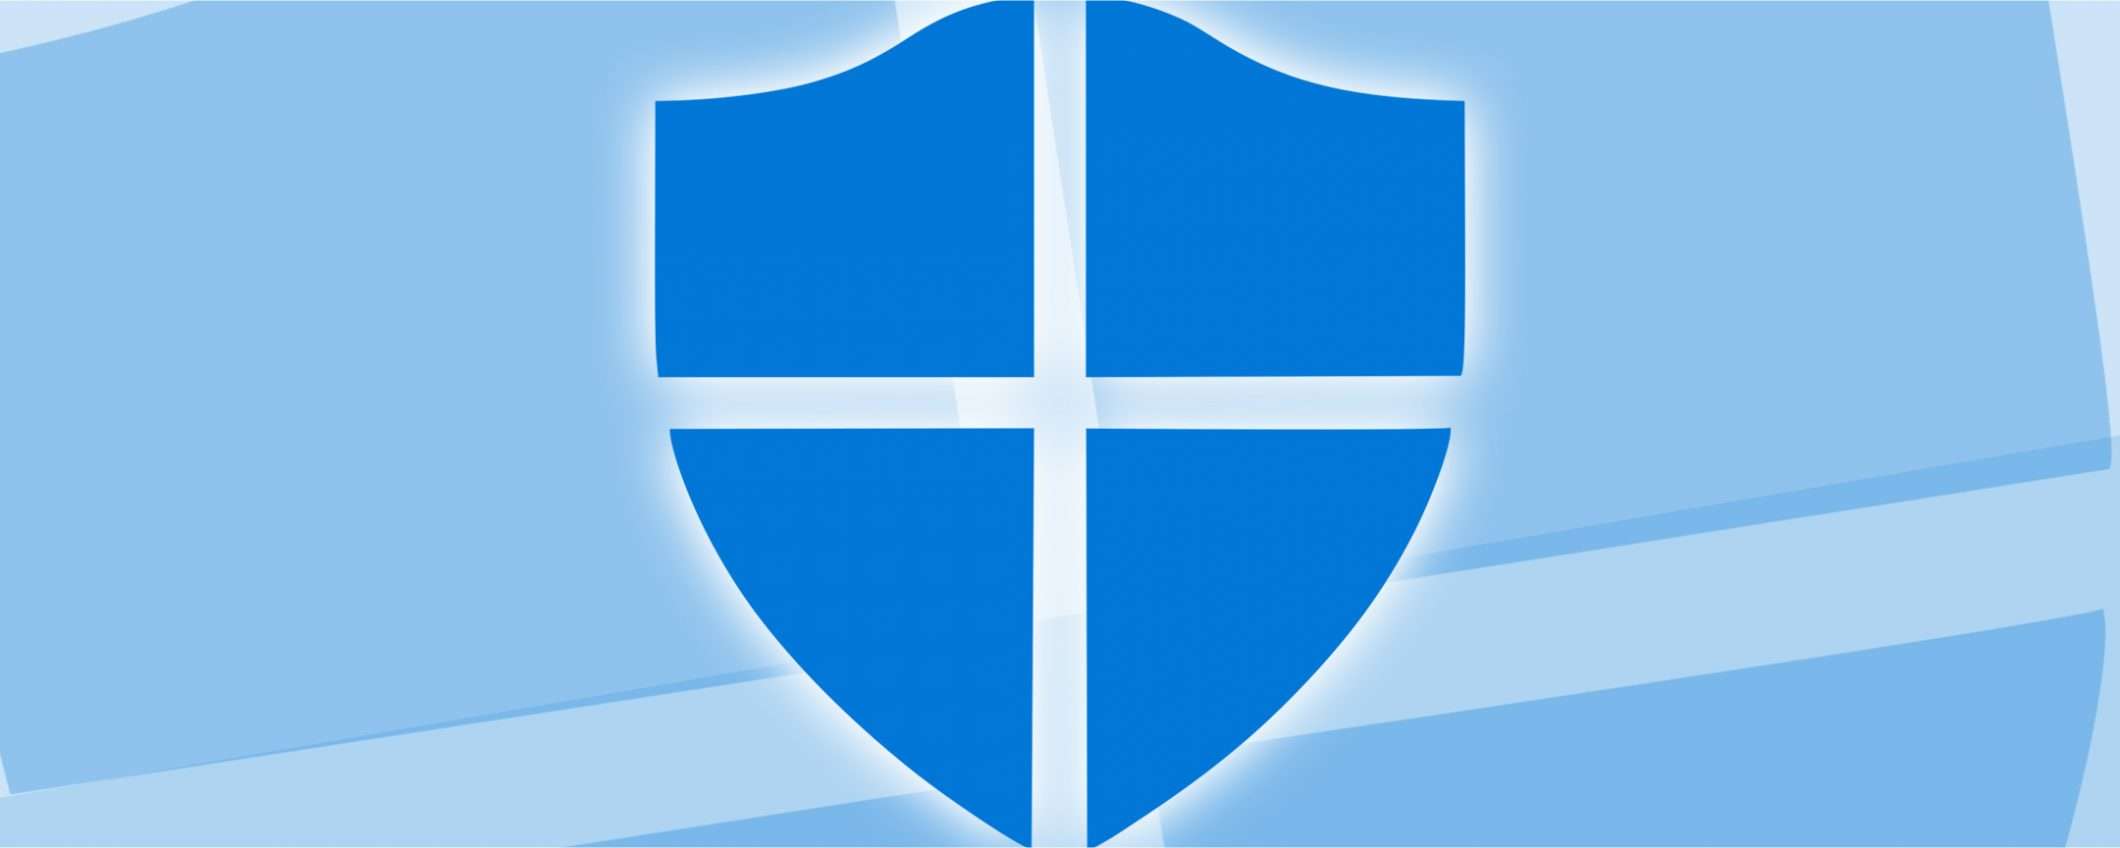 Windows 10: un update crea problemi a Defender?